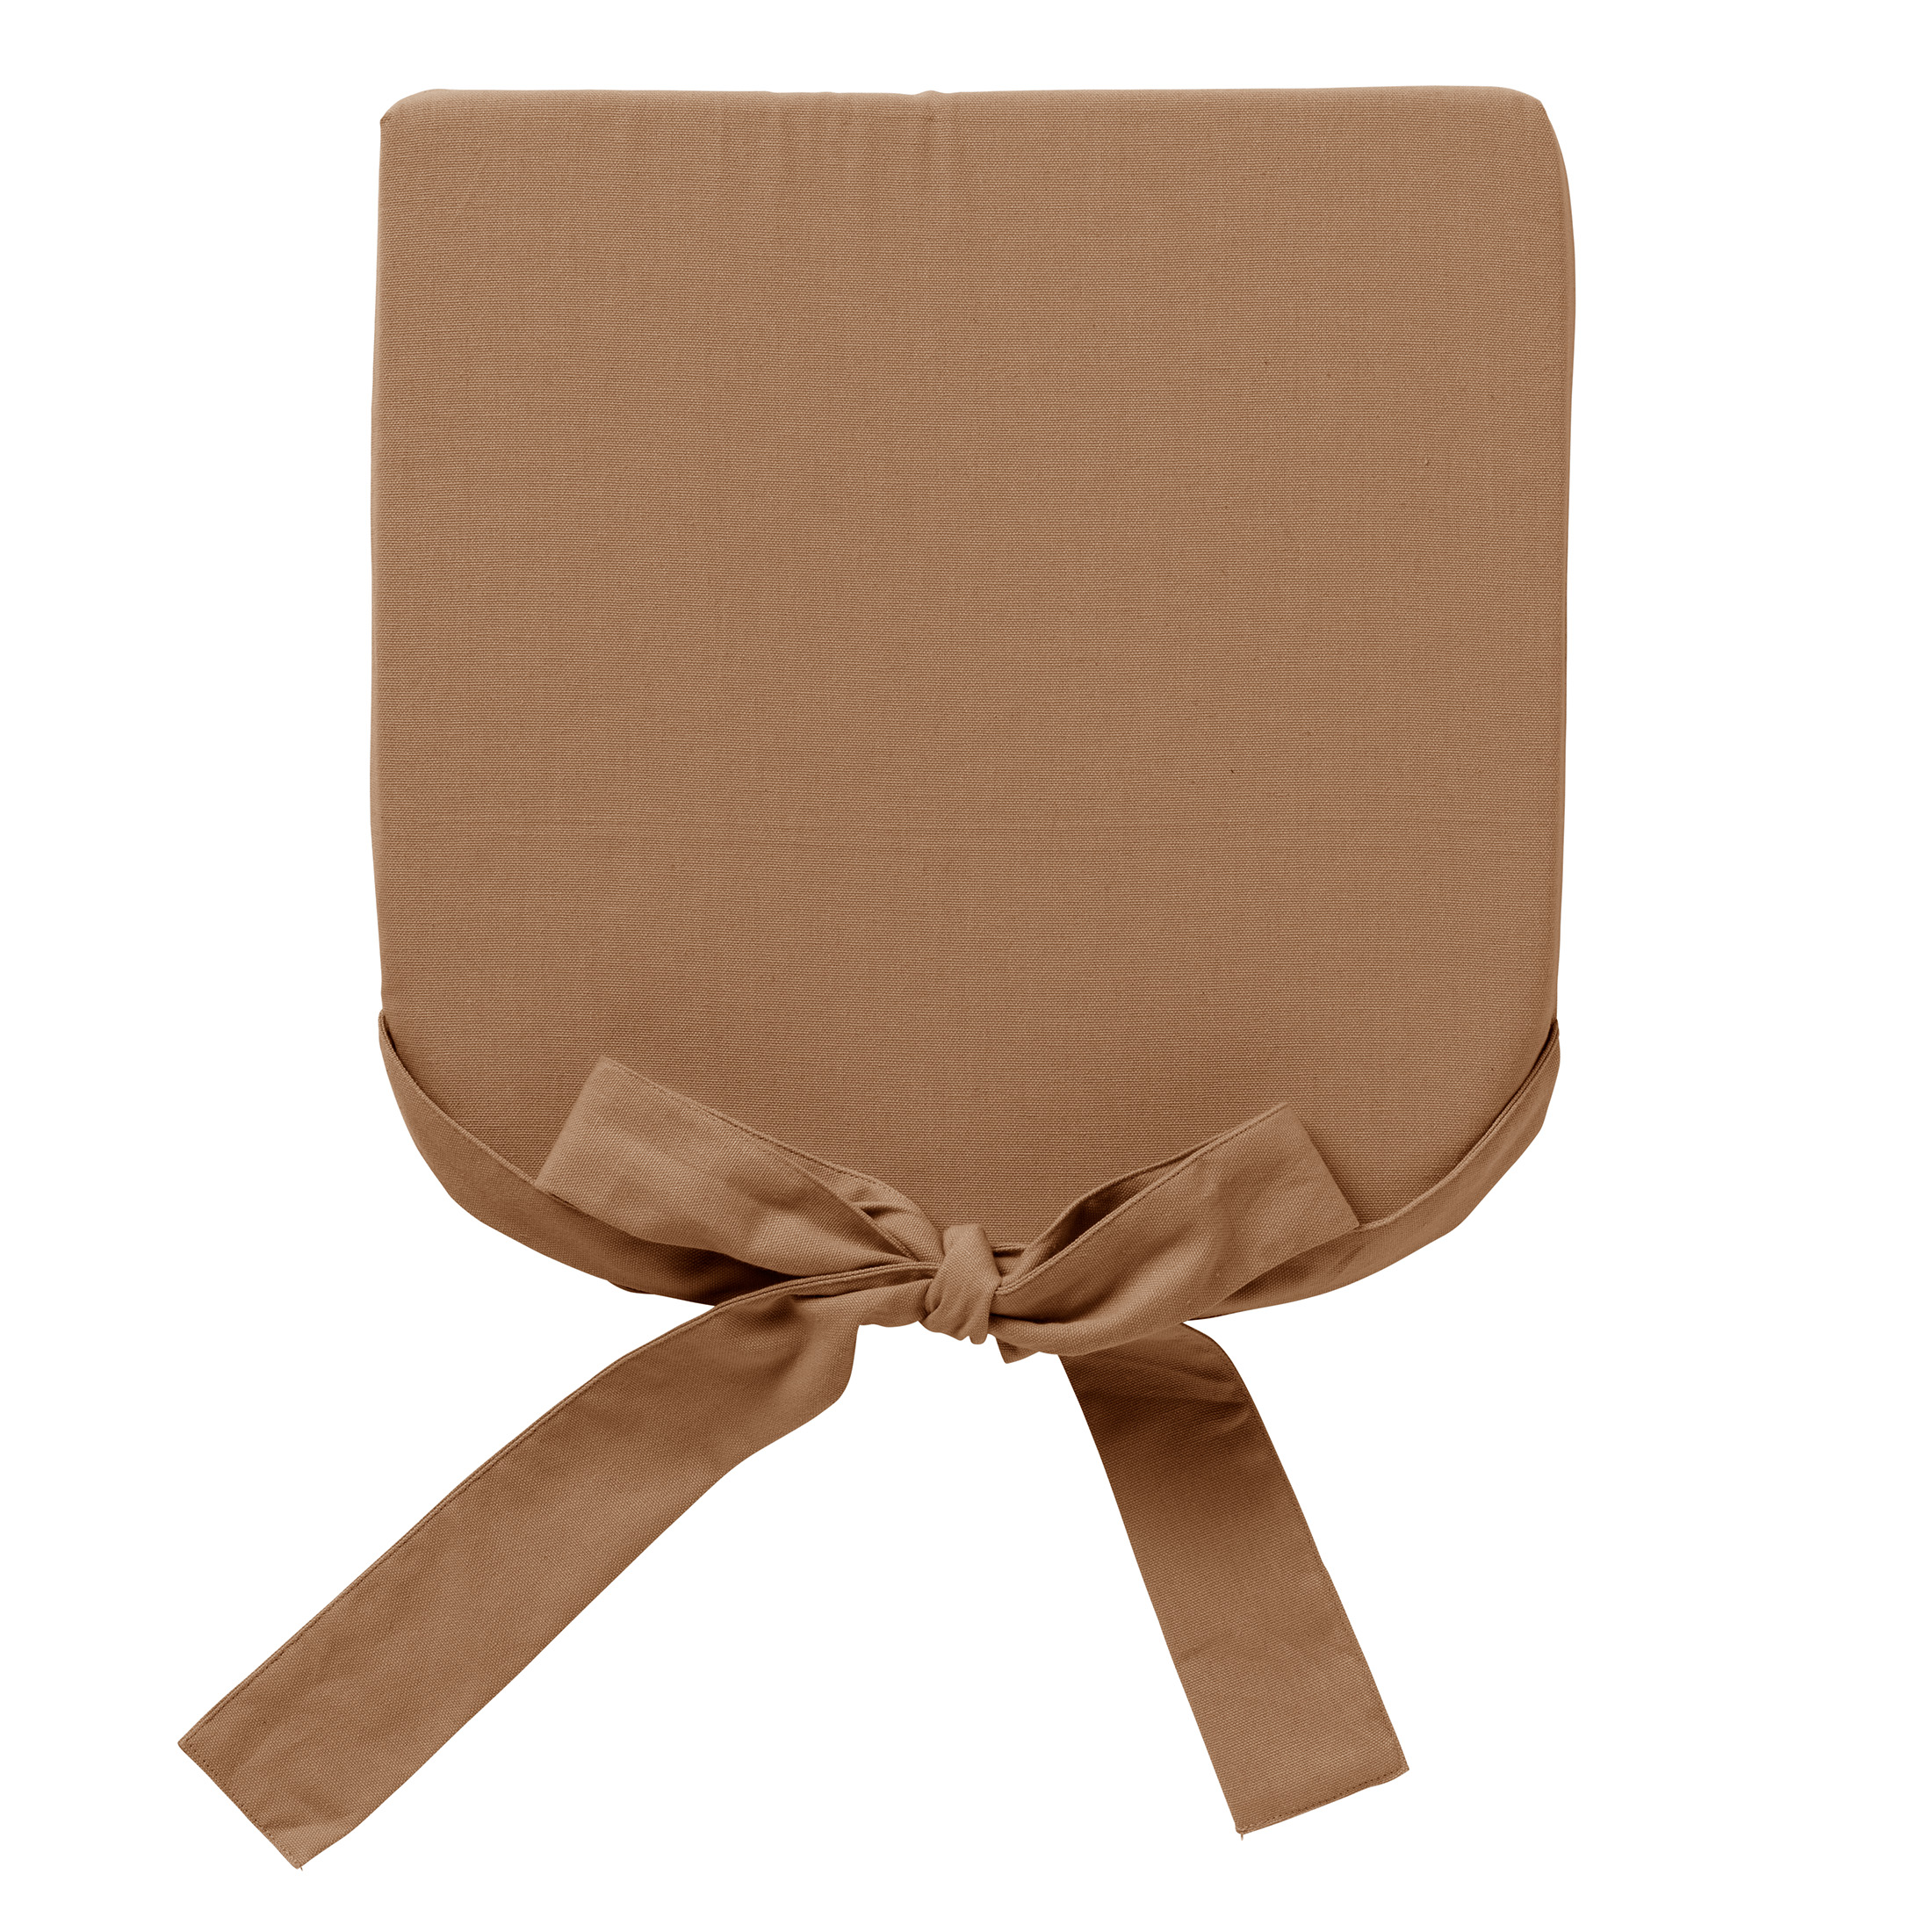 JAVA - Seat pad cushion with ties Tobacco Brown 40x40 cm